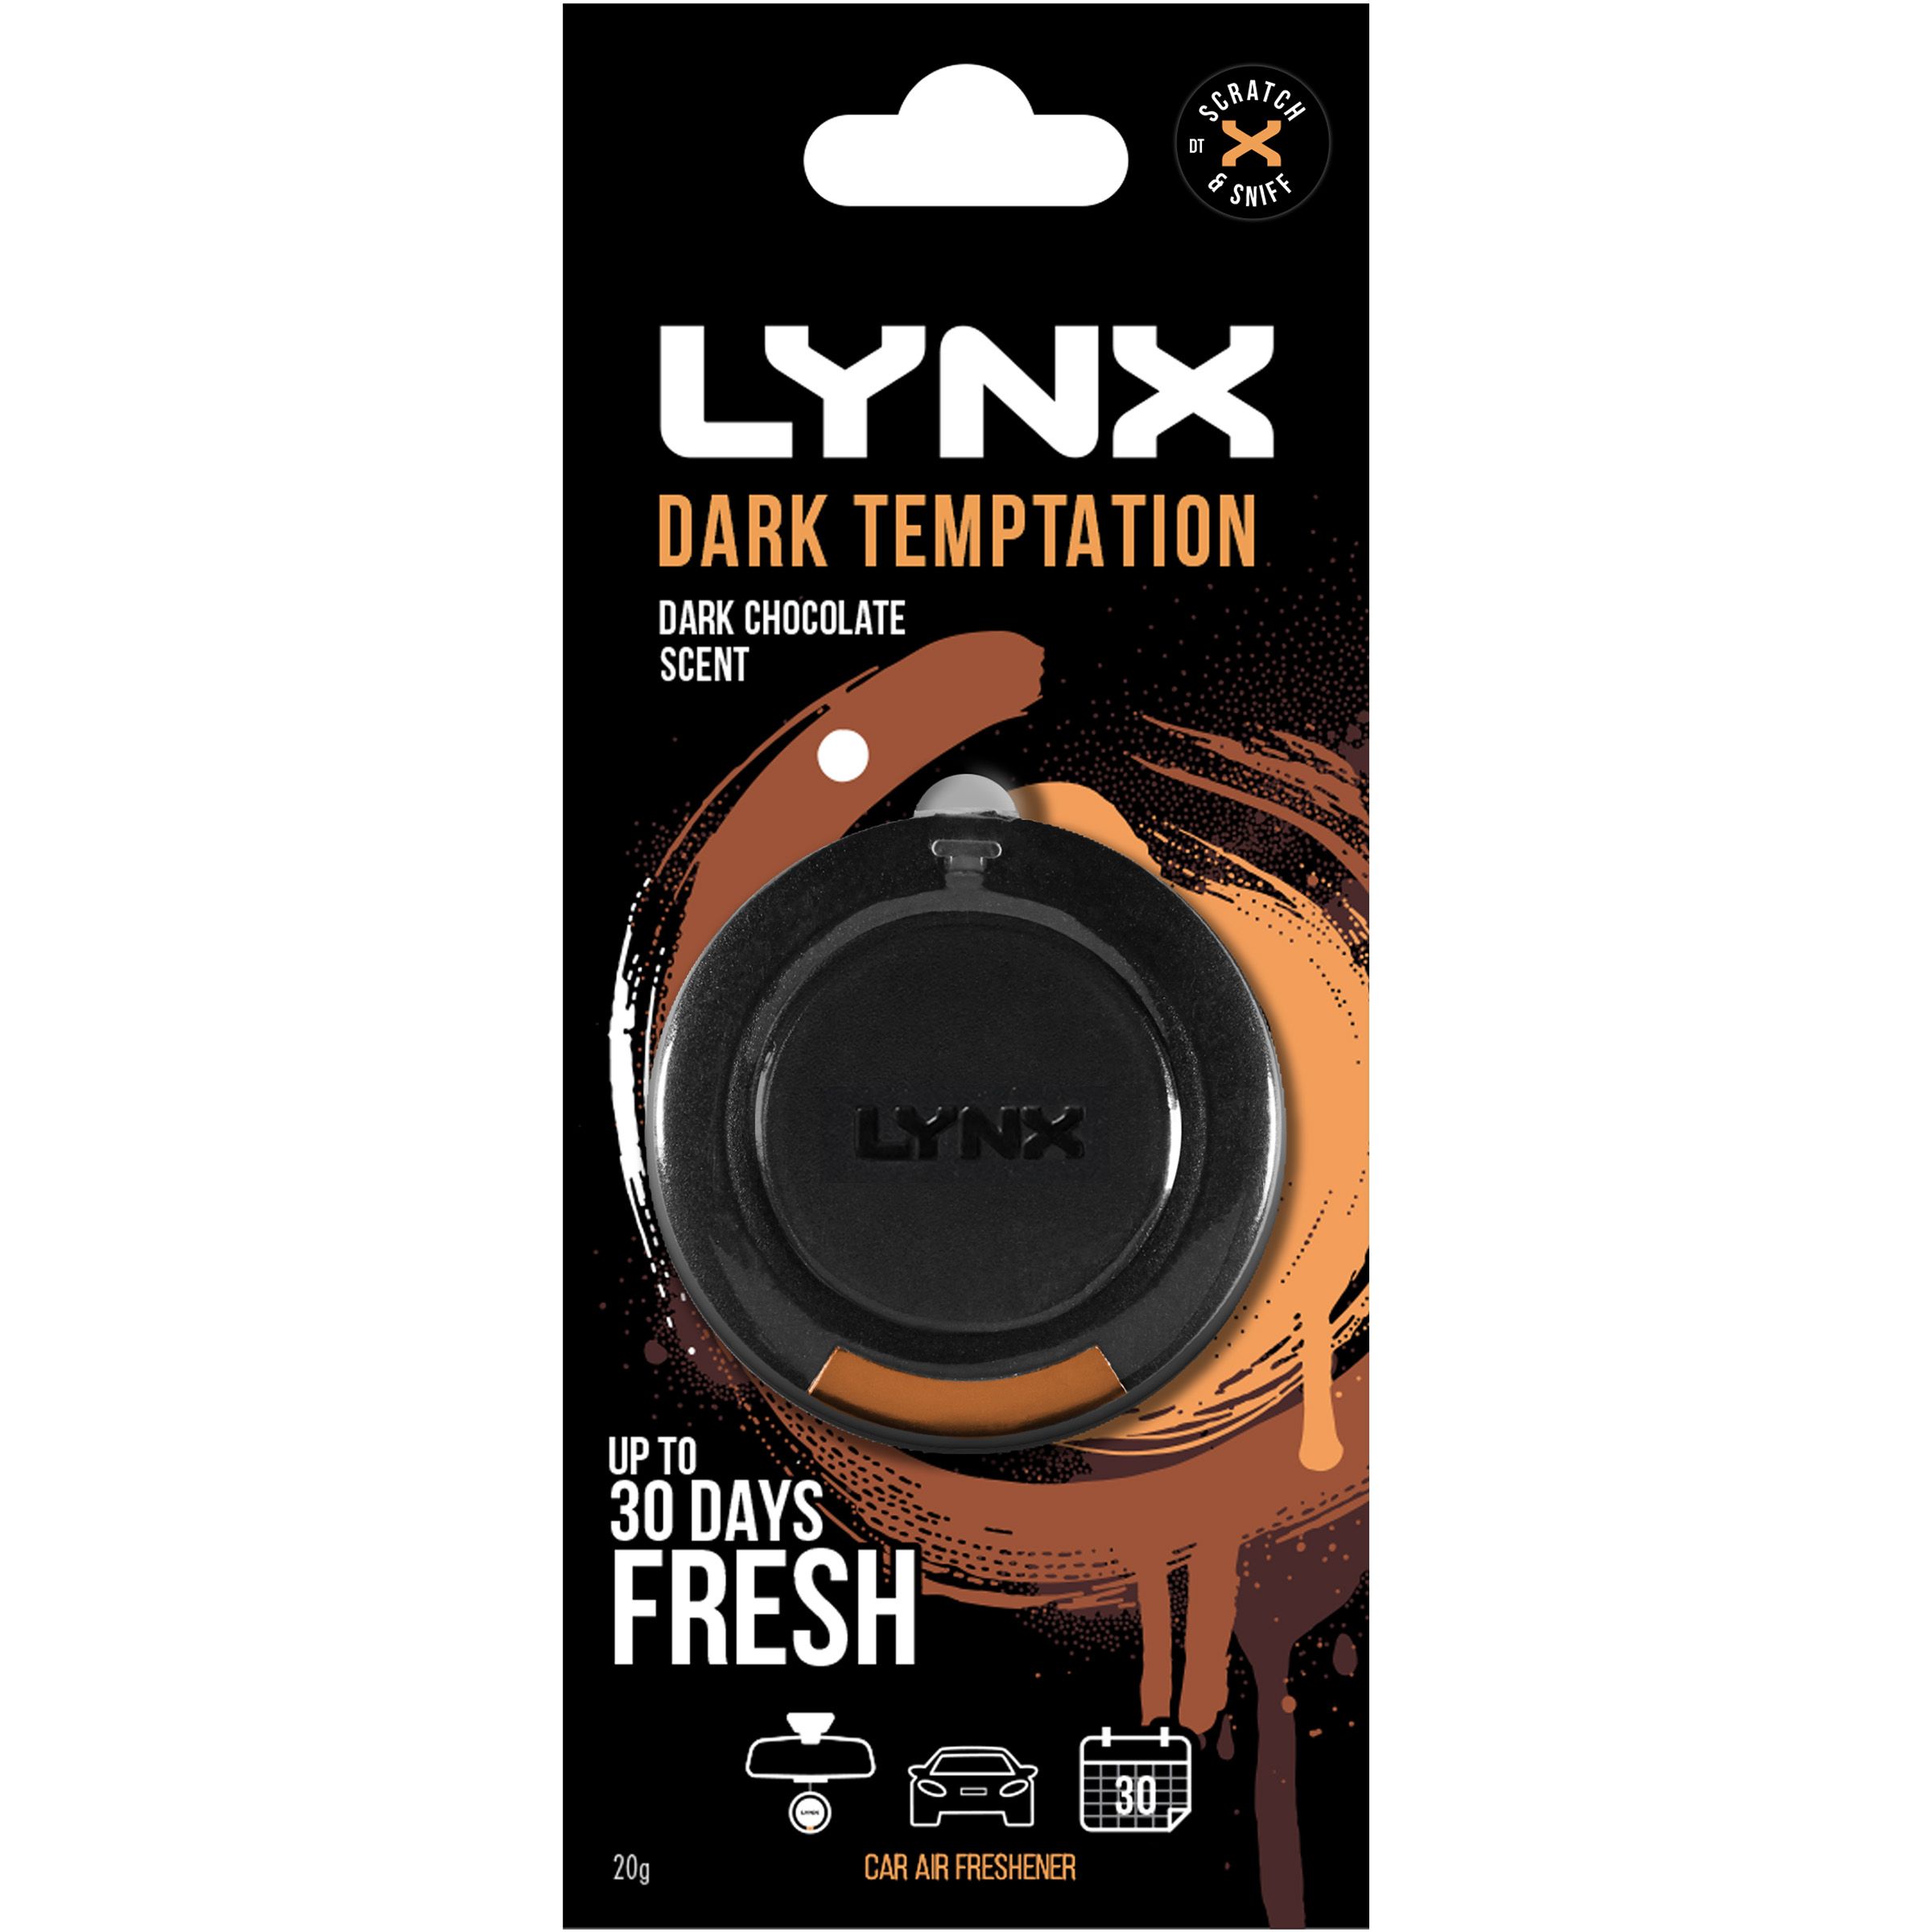 LYNX Dark Temptation Air freshener, 20g